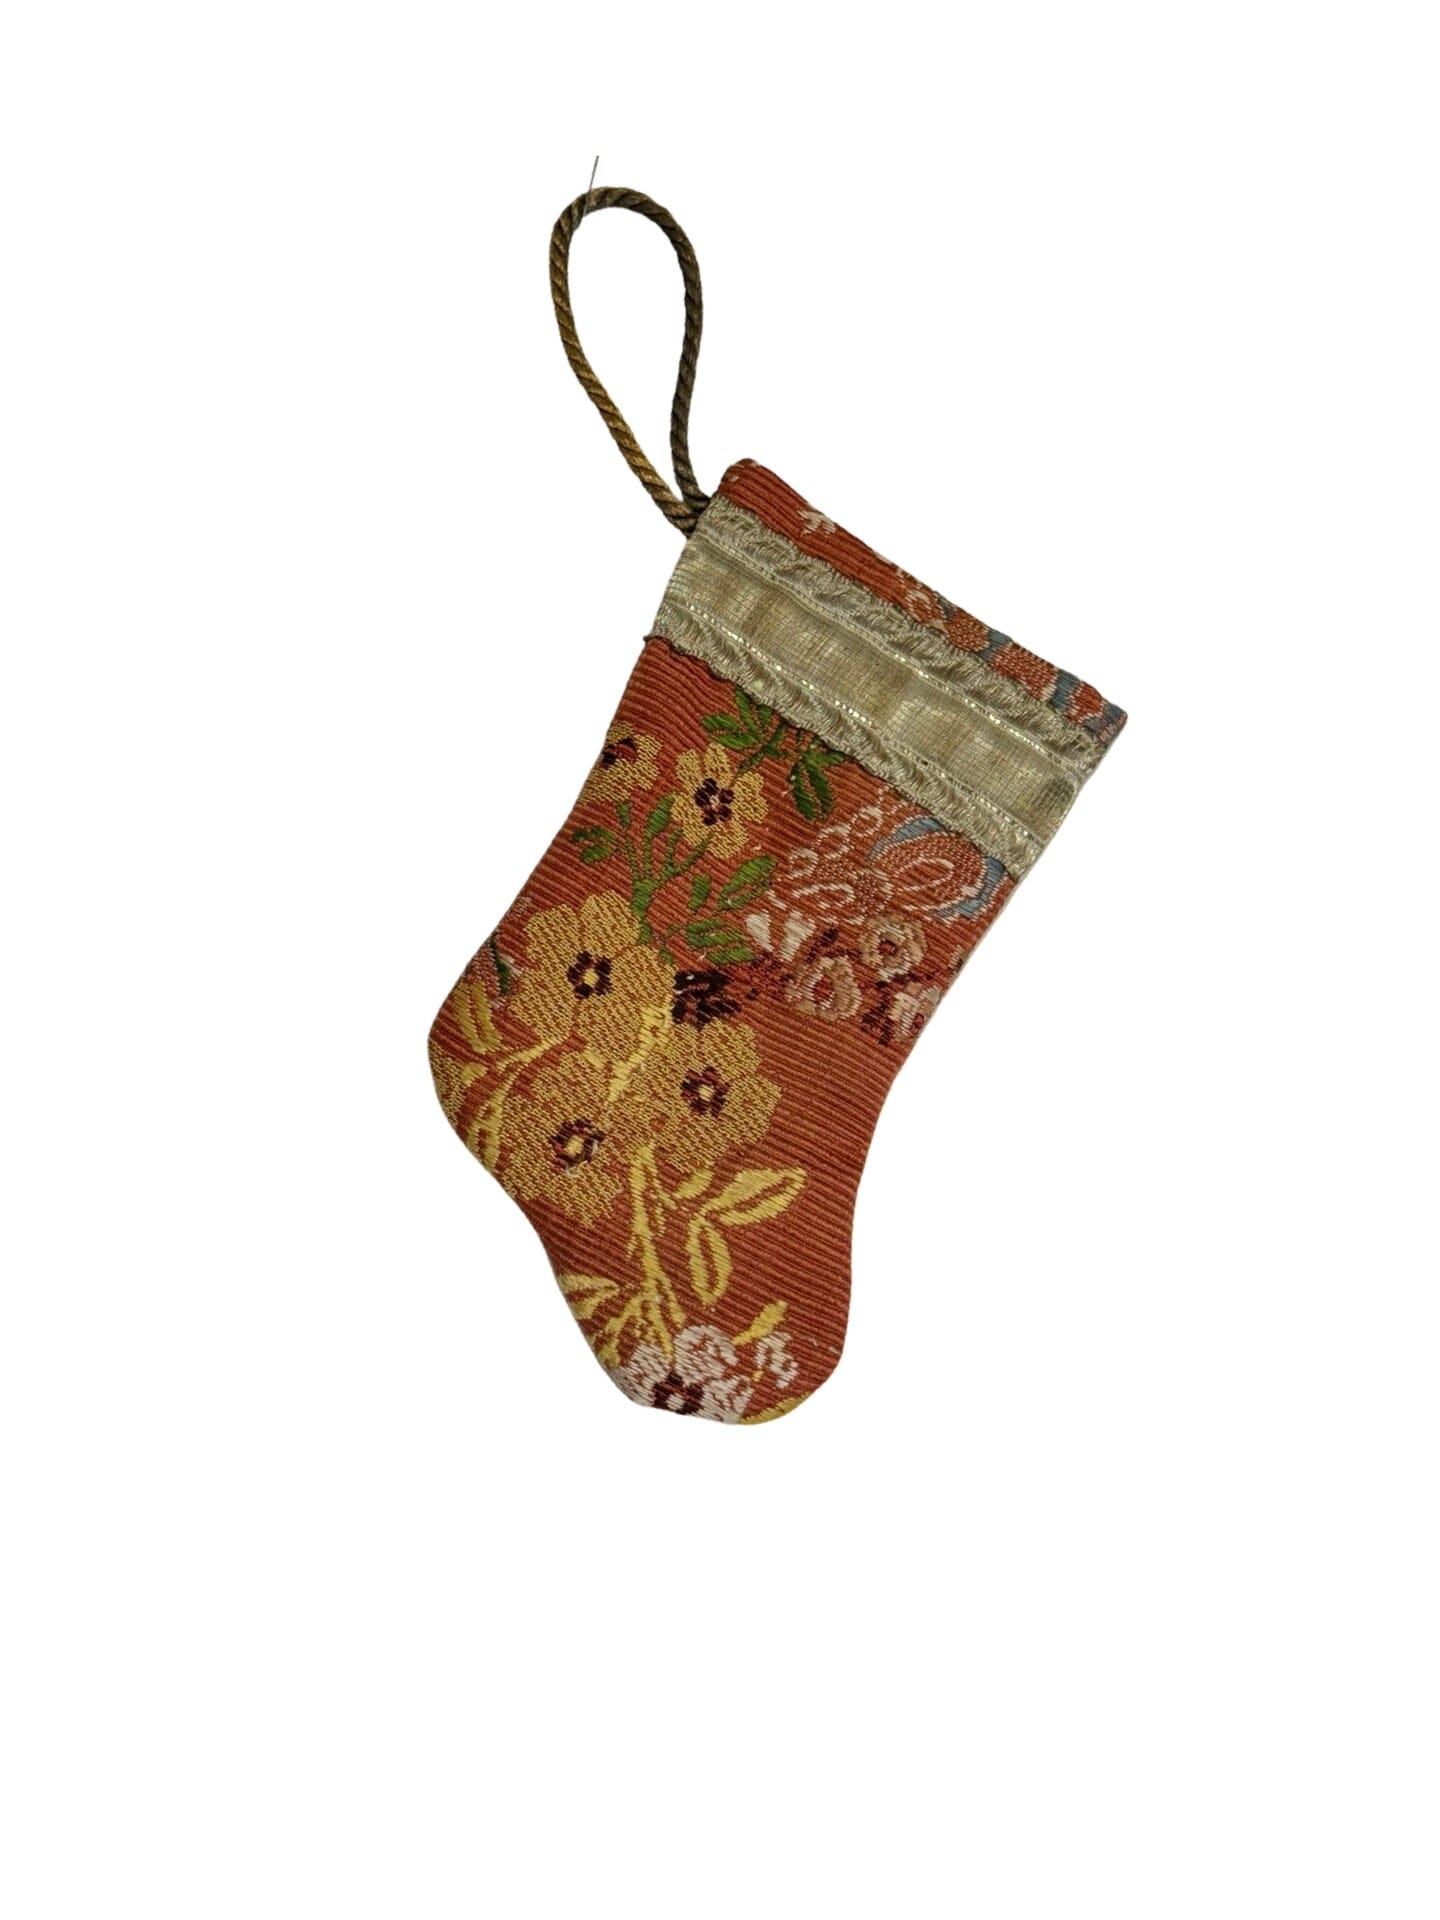 Handmade Mini Stocking Made From Vintage Fabric and Trims- Bronze Rose Floral Ornament B. Viz Design F 